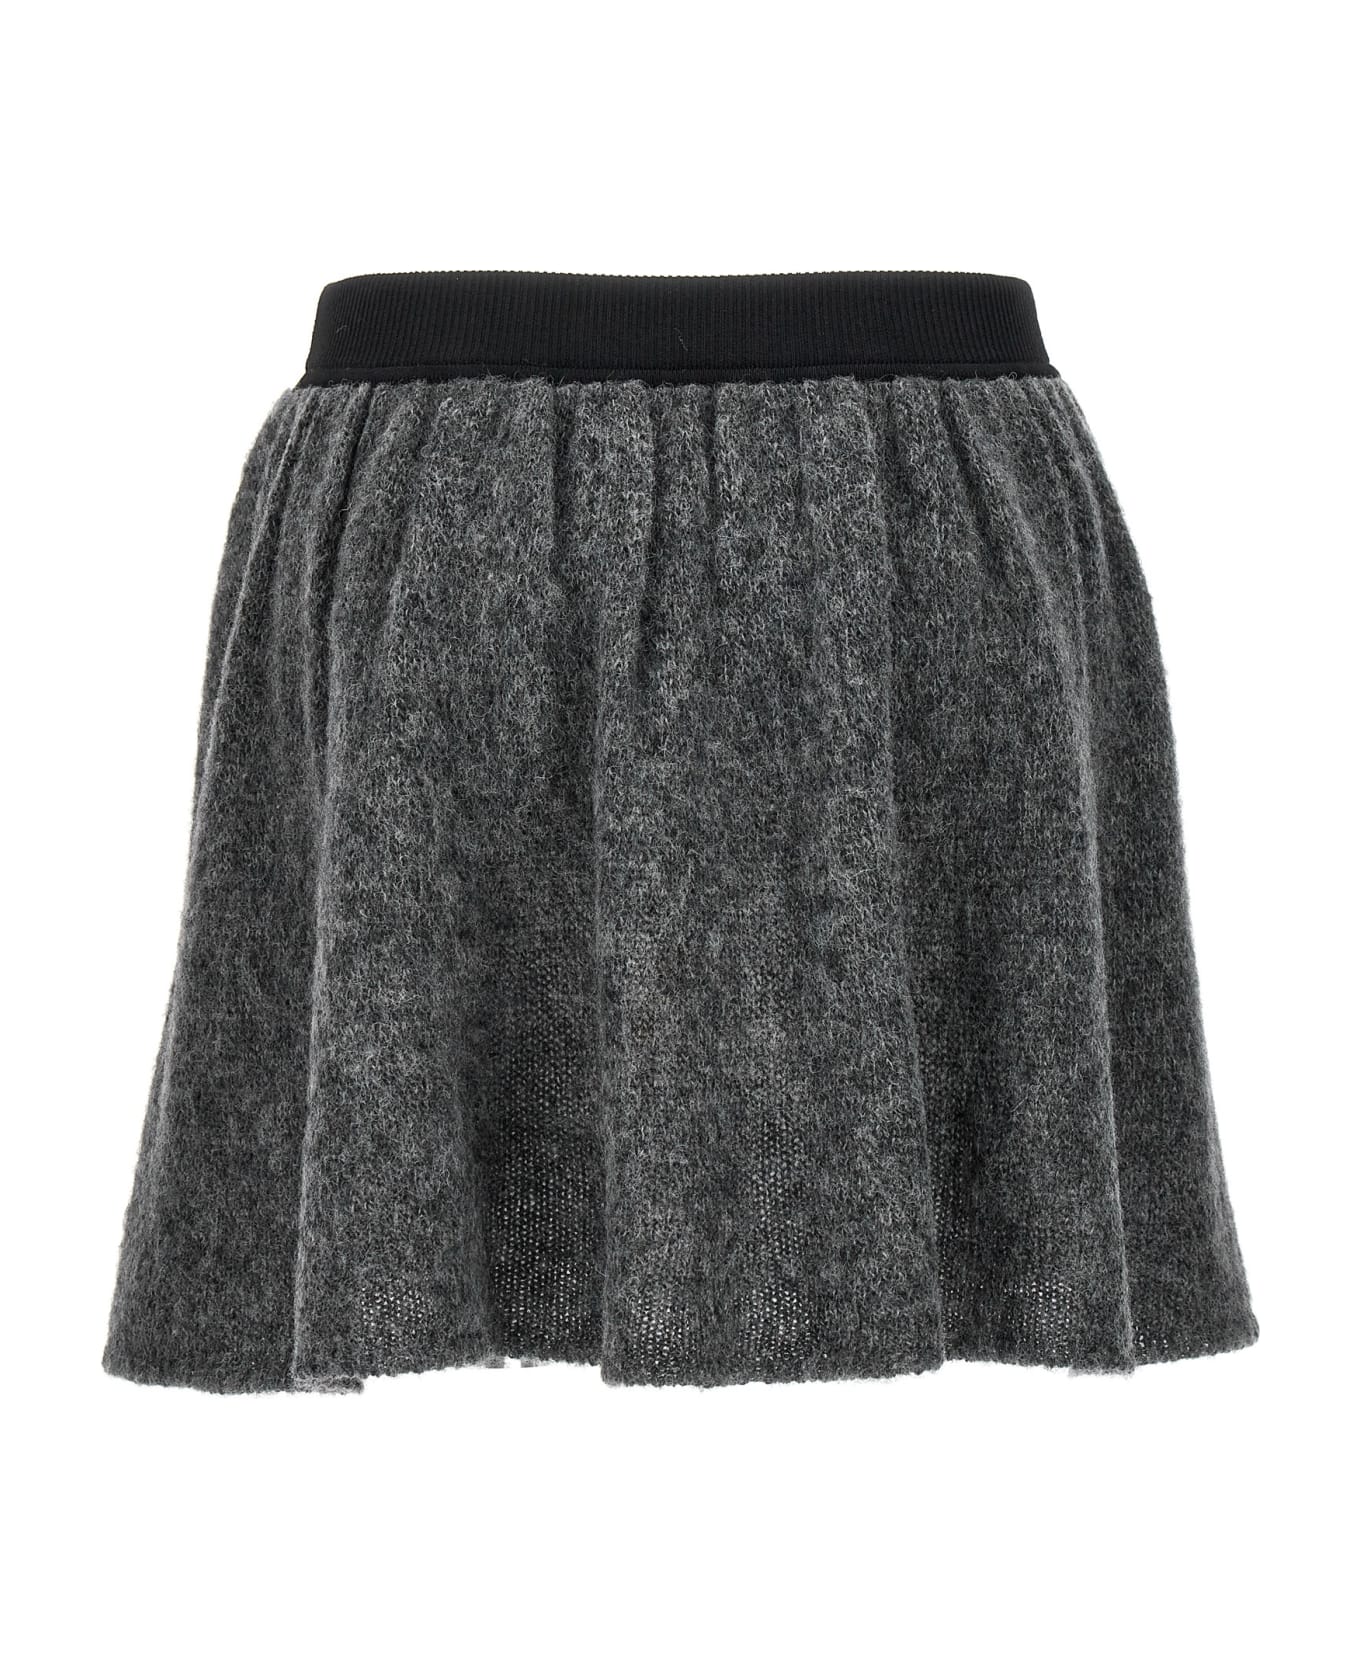 Loewe Two-tone Miniskirt - Multicolor スカート